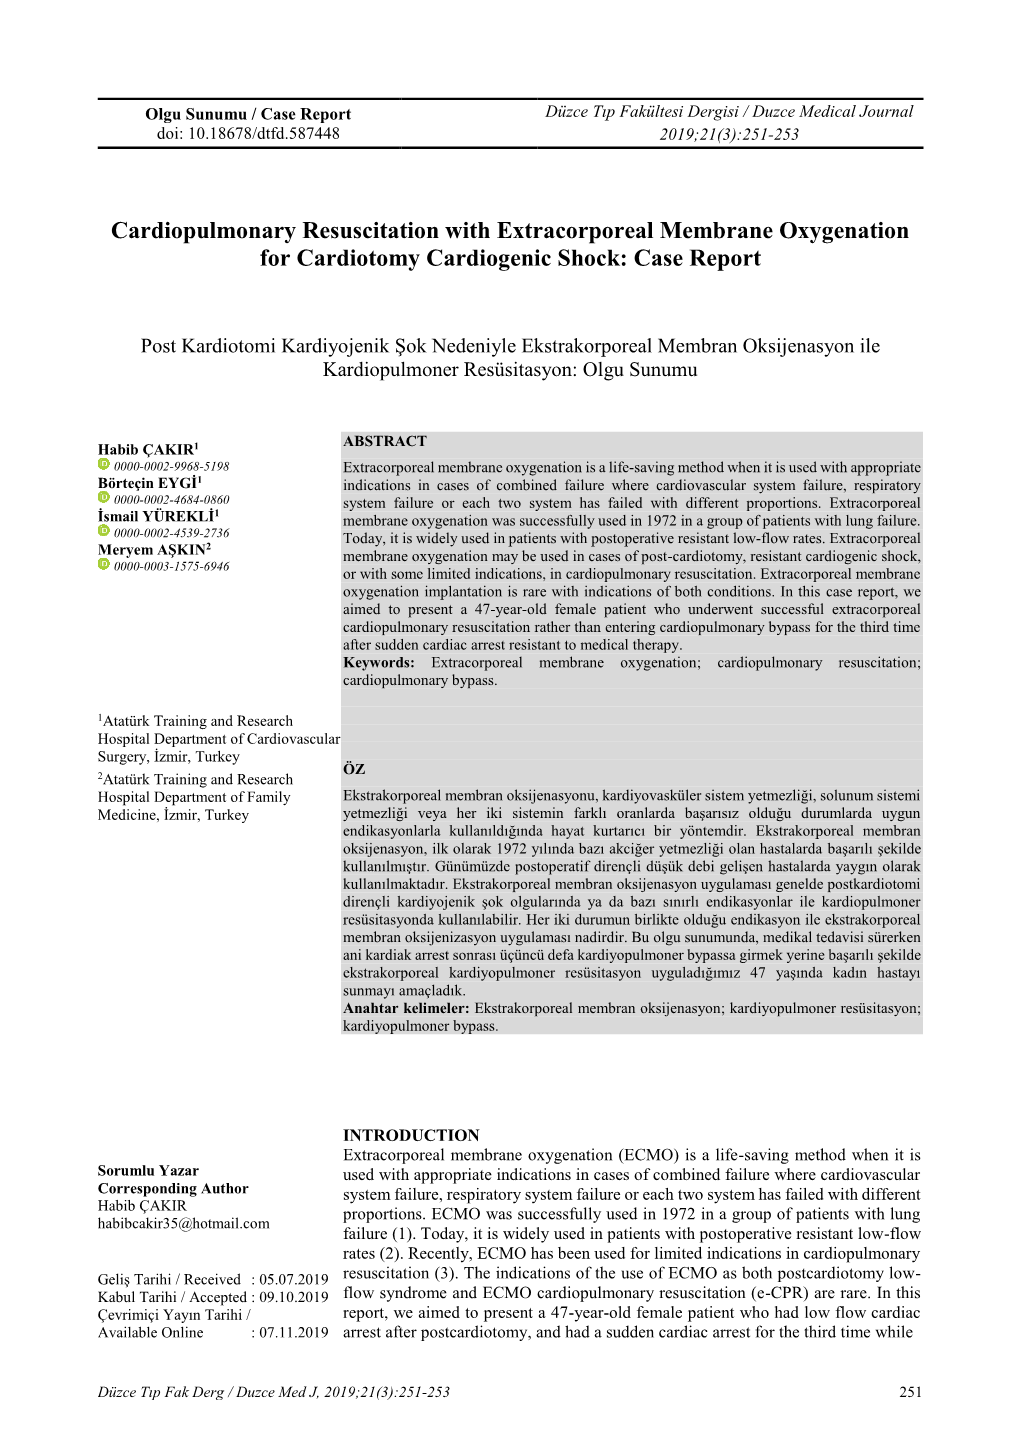 Cardiopulmonary Resuscitation with Extracorporeal Membrane Oxygenation for Cardiotomy Cardiogenic Shock: Case Report